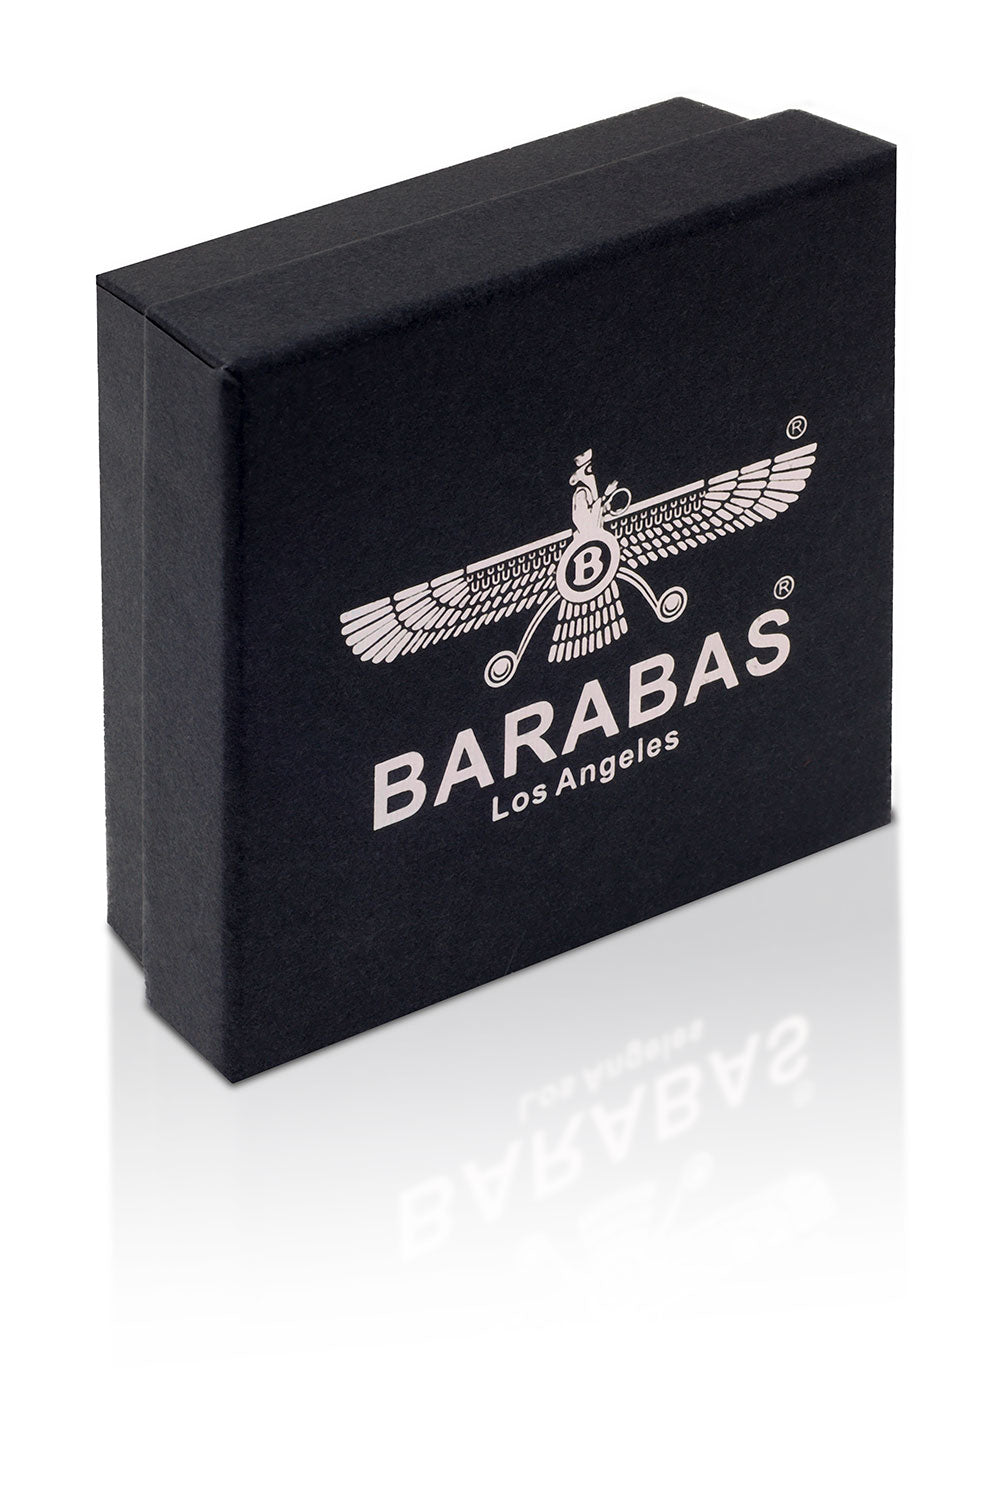 Barabas Unisex Two Color Braided Leather Beaded Bangle Bracelets 4BMS09 Black